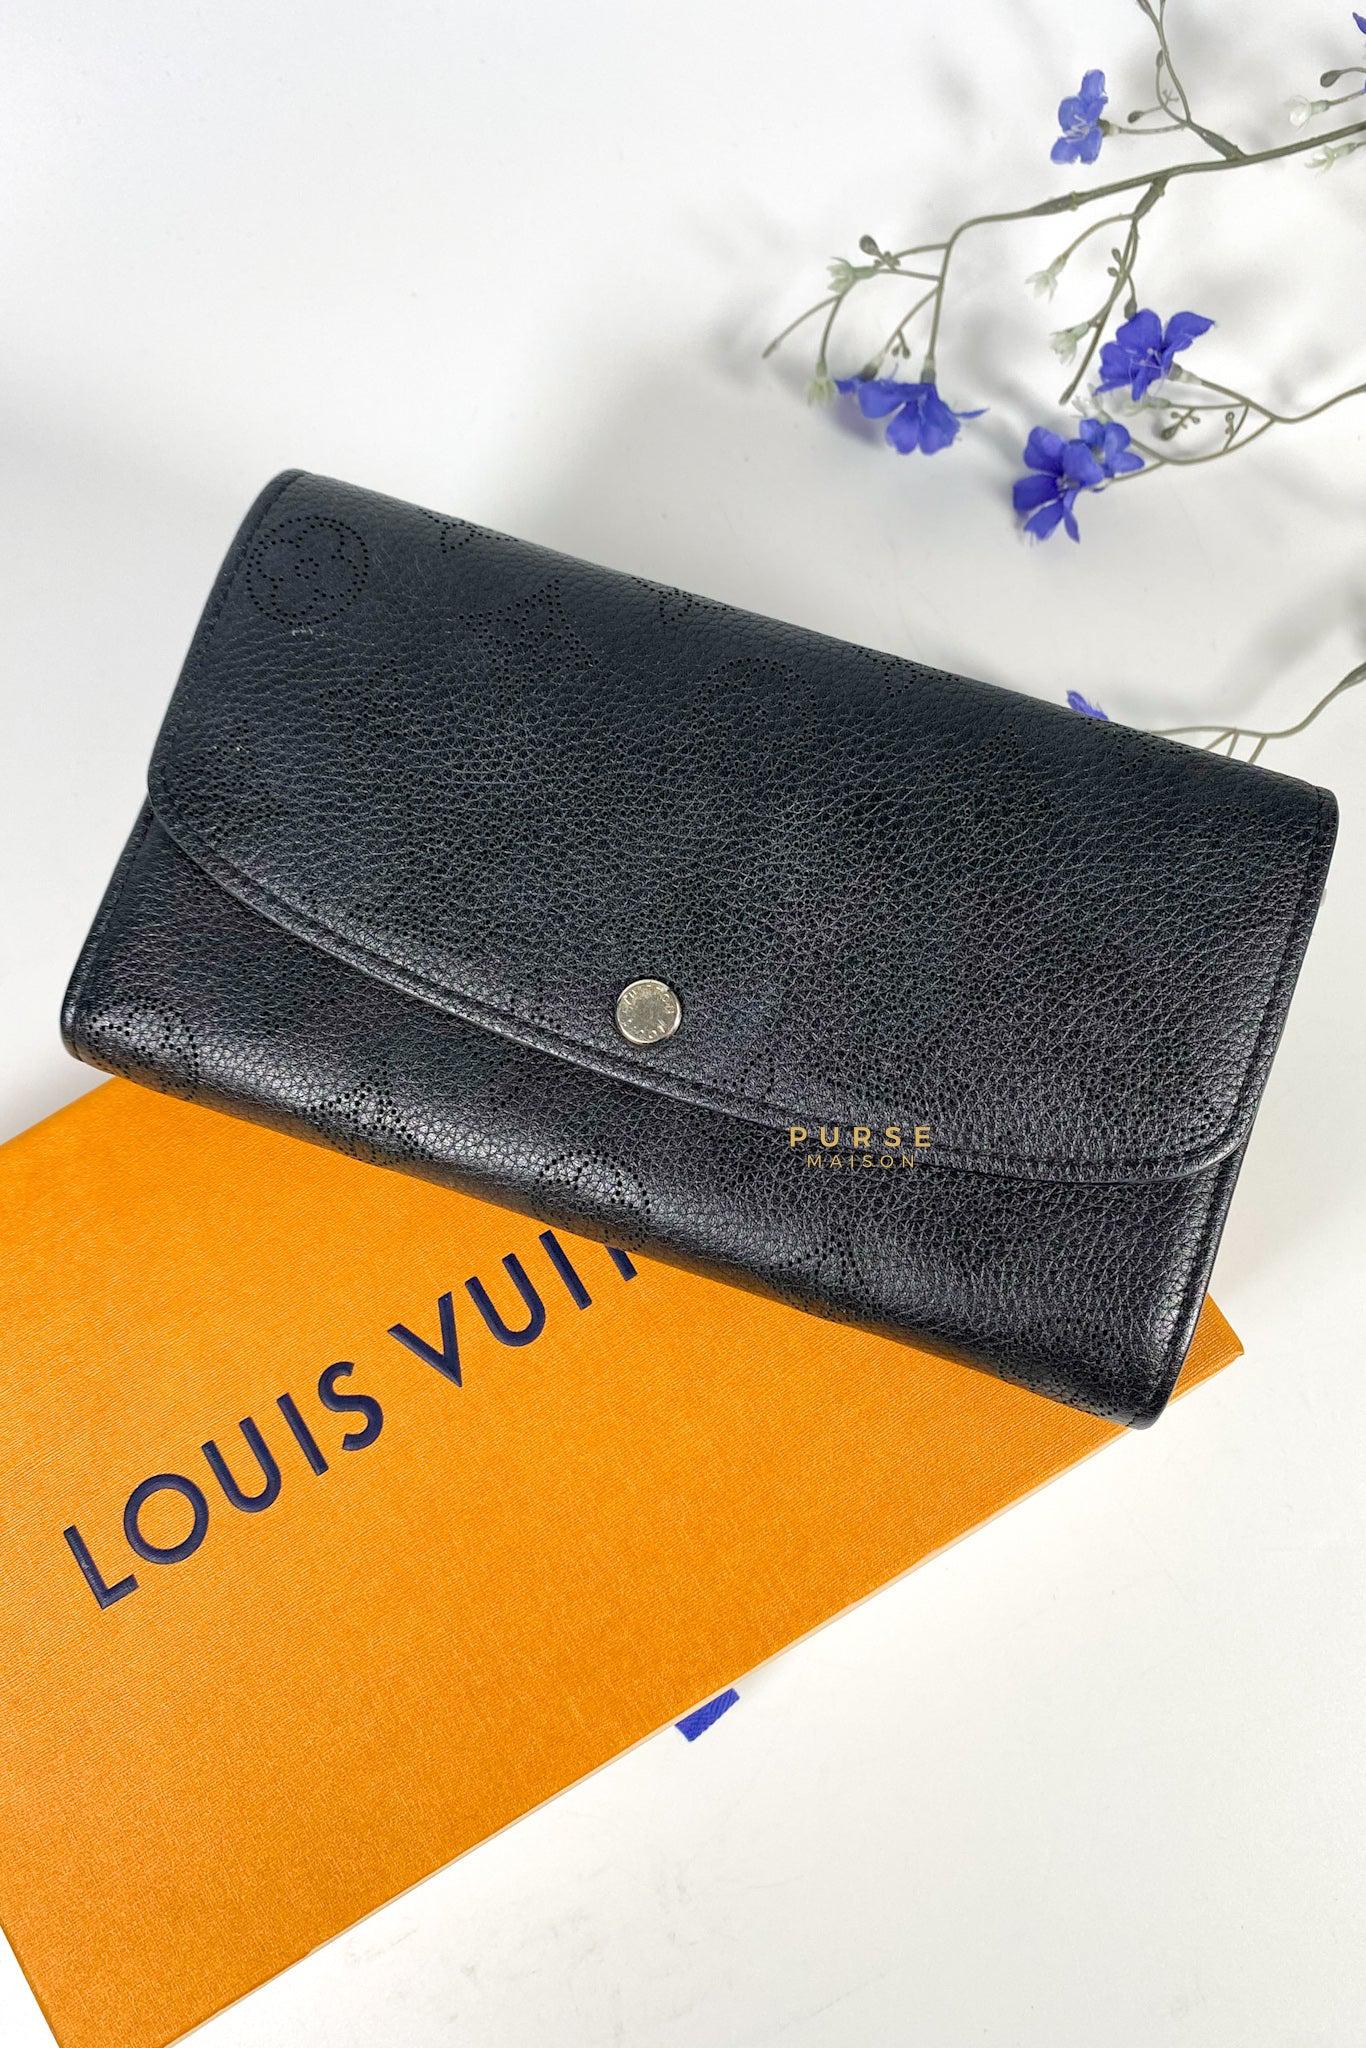 Louis Vuitton Iris Wallet in Black Mahina Leather